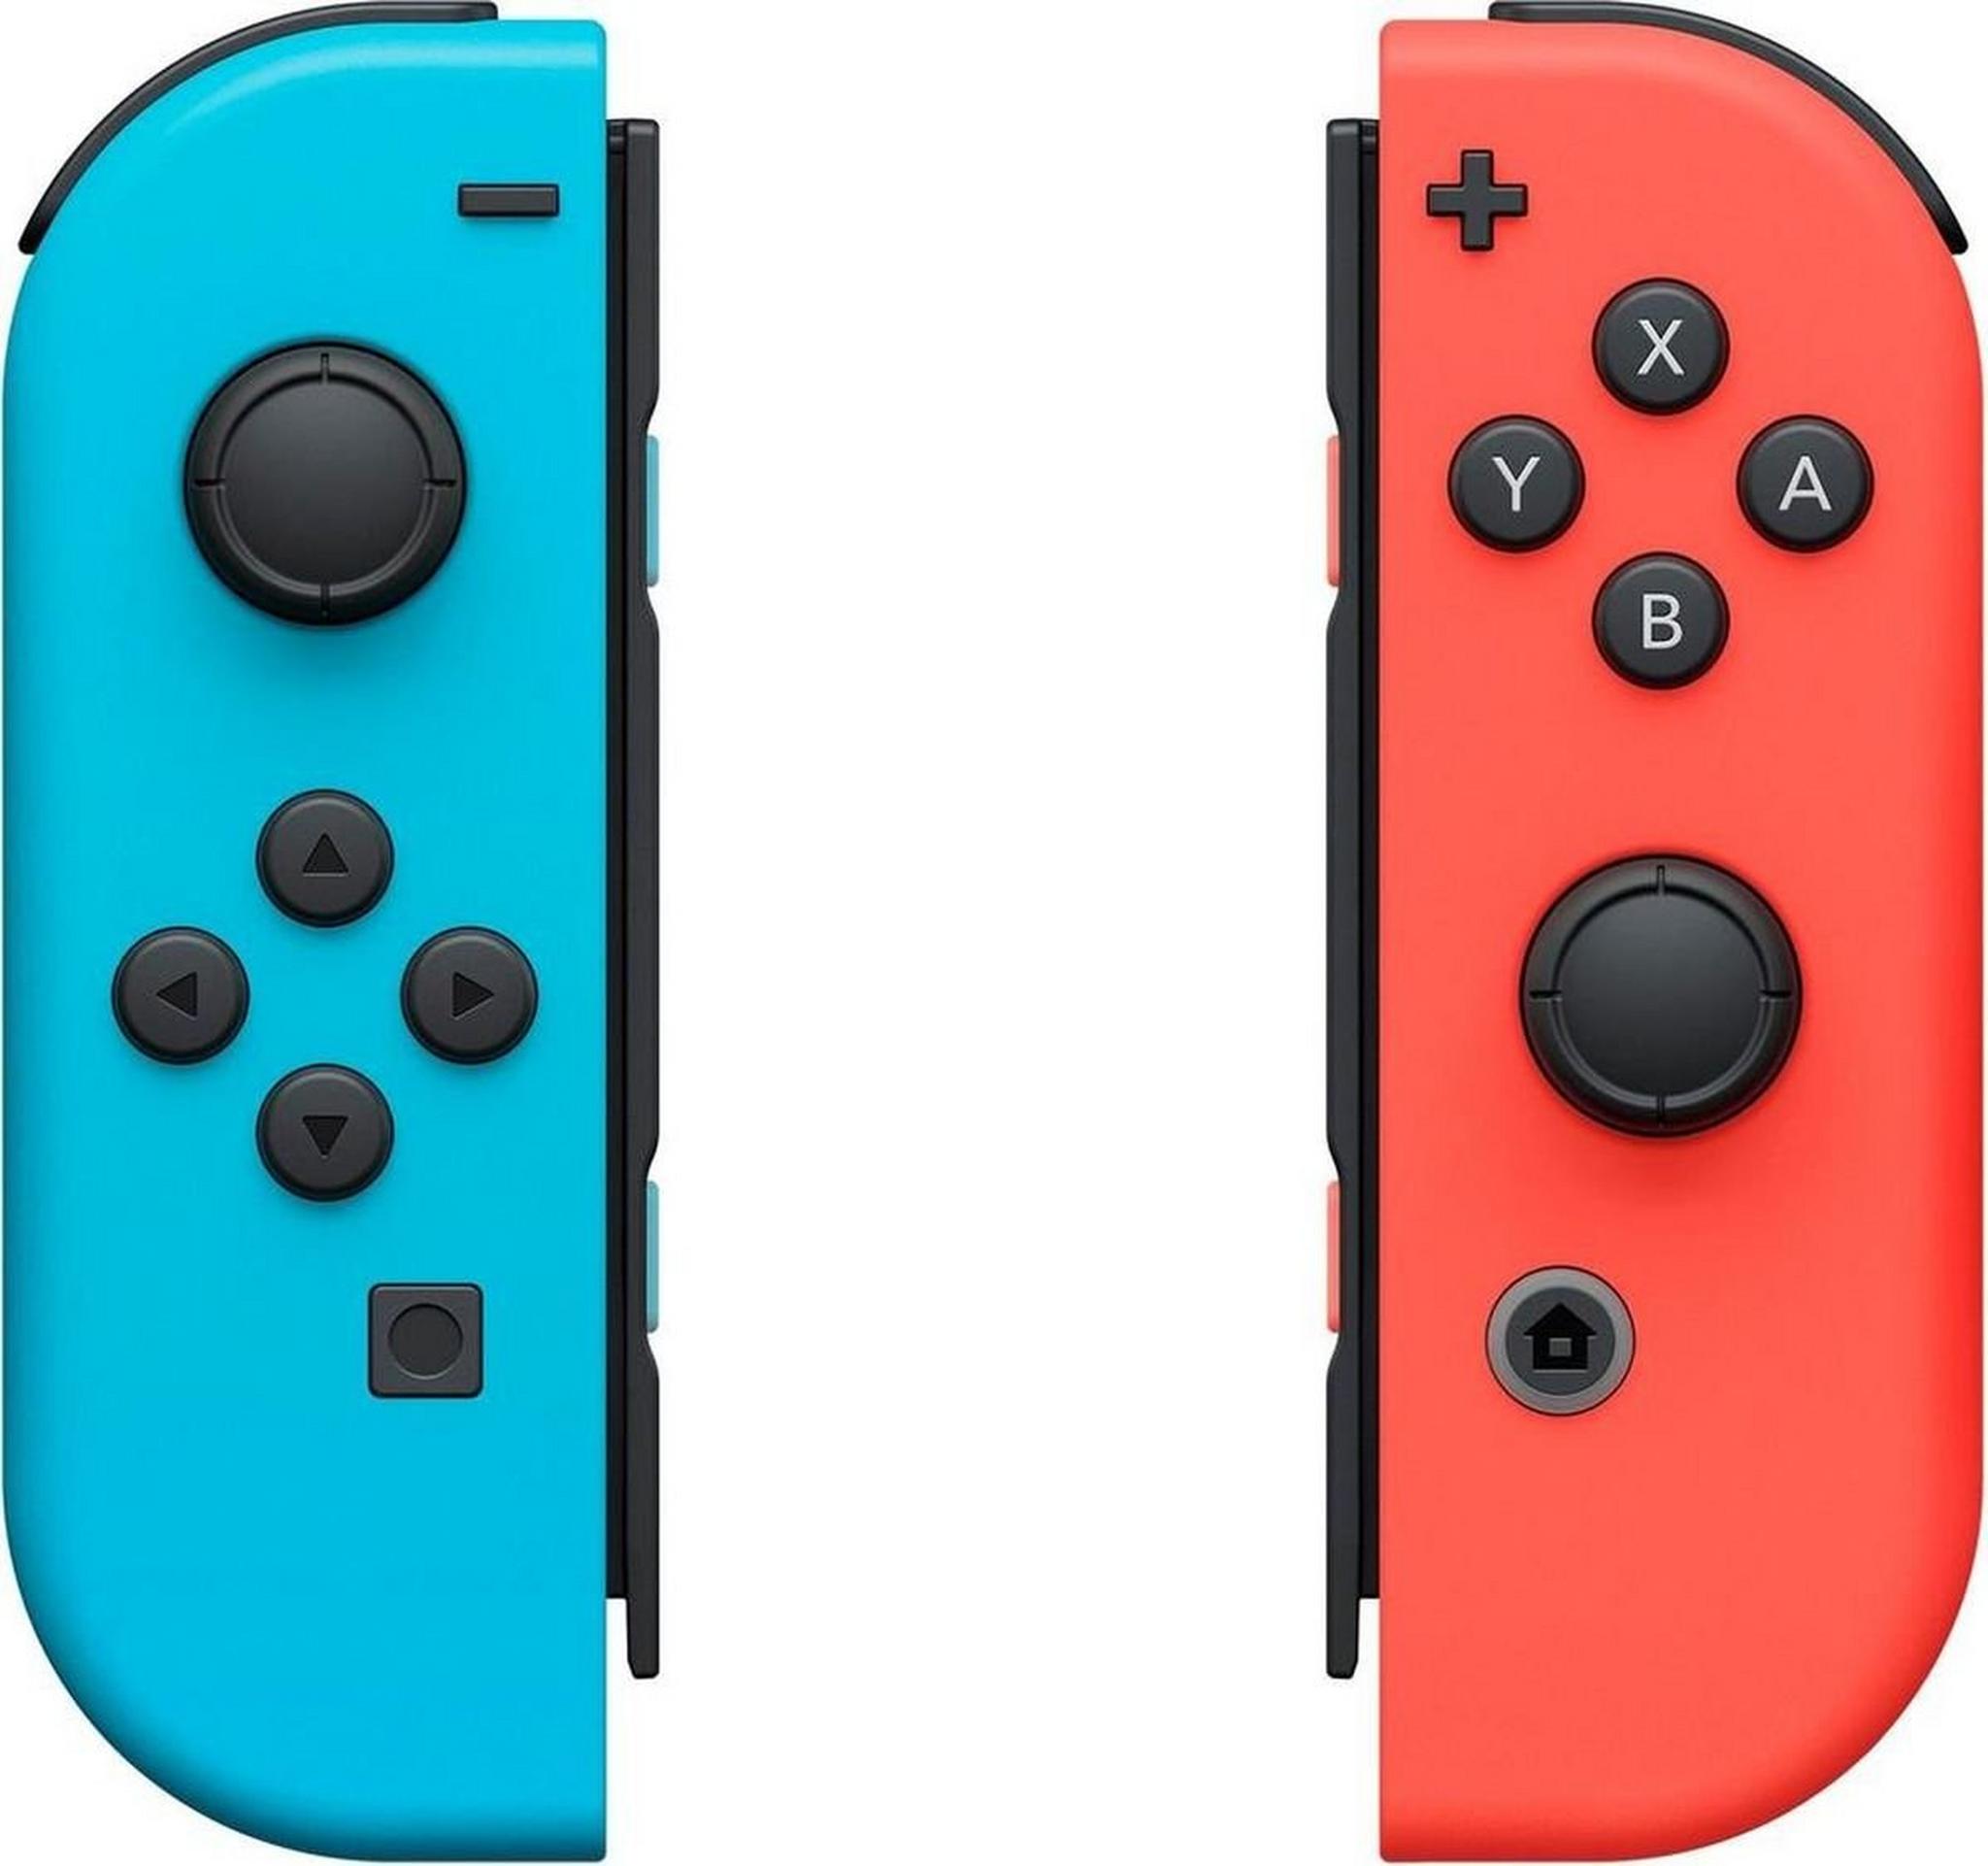 Nintendo Switch Joy-Con Controller Set - Red/Blue